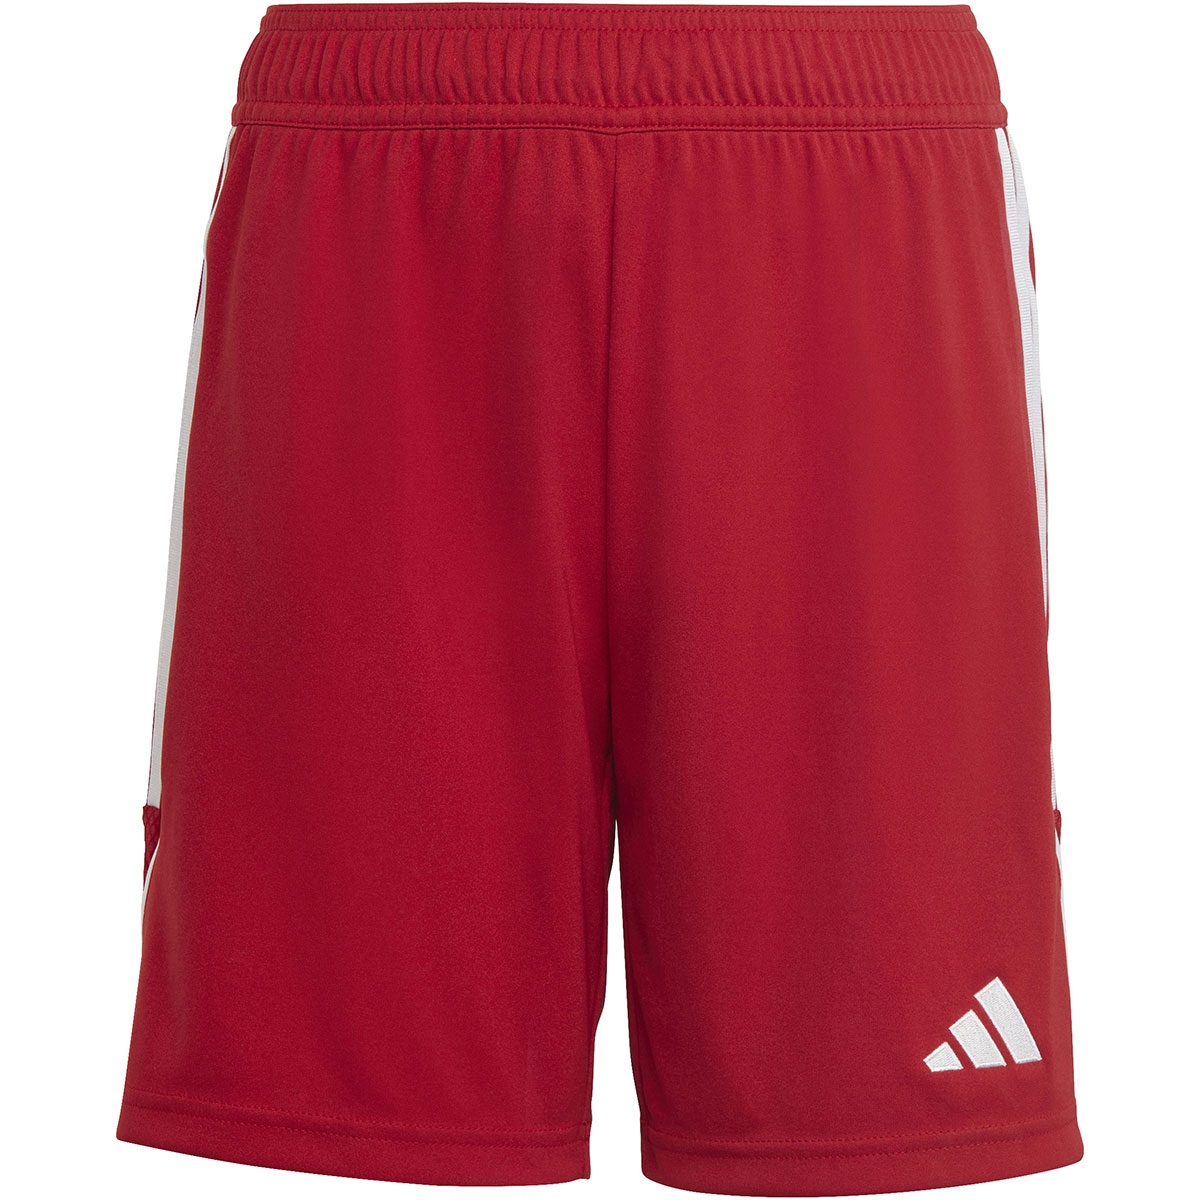 Adidas Kinder Shorts Tiro 23 rot-weiß